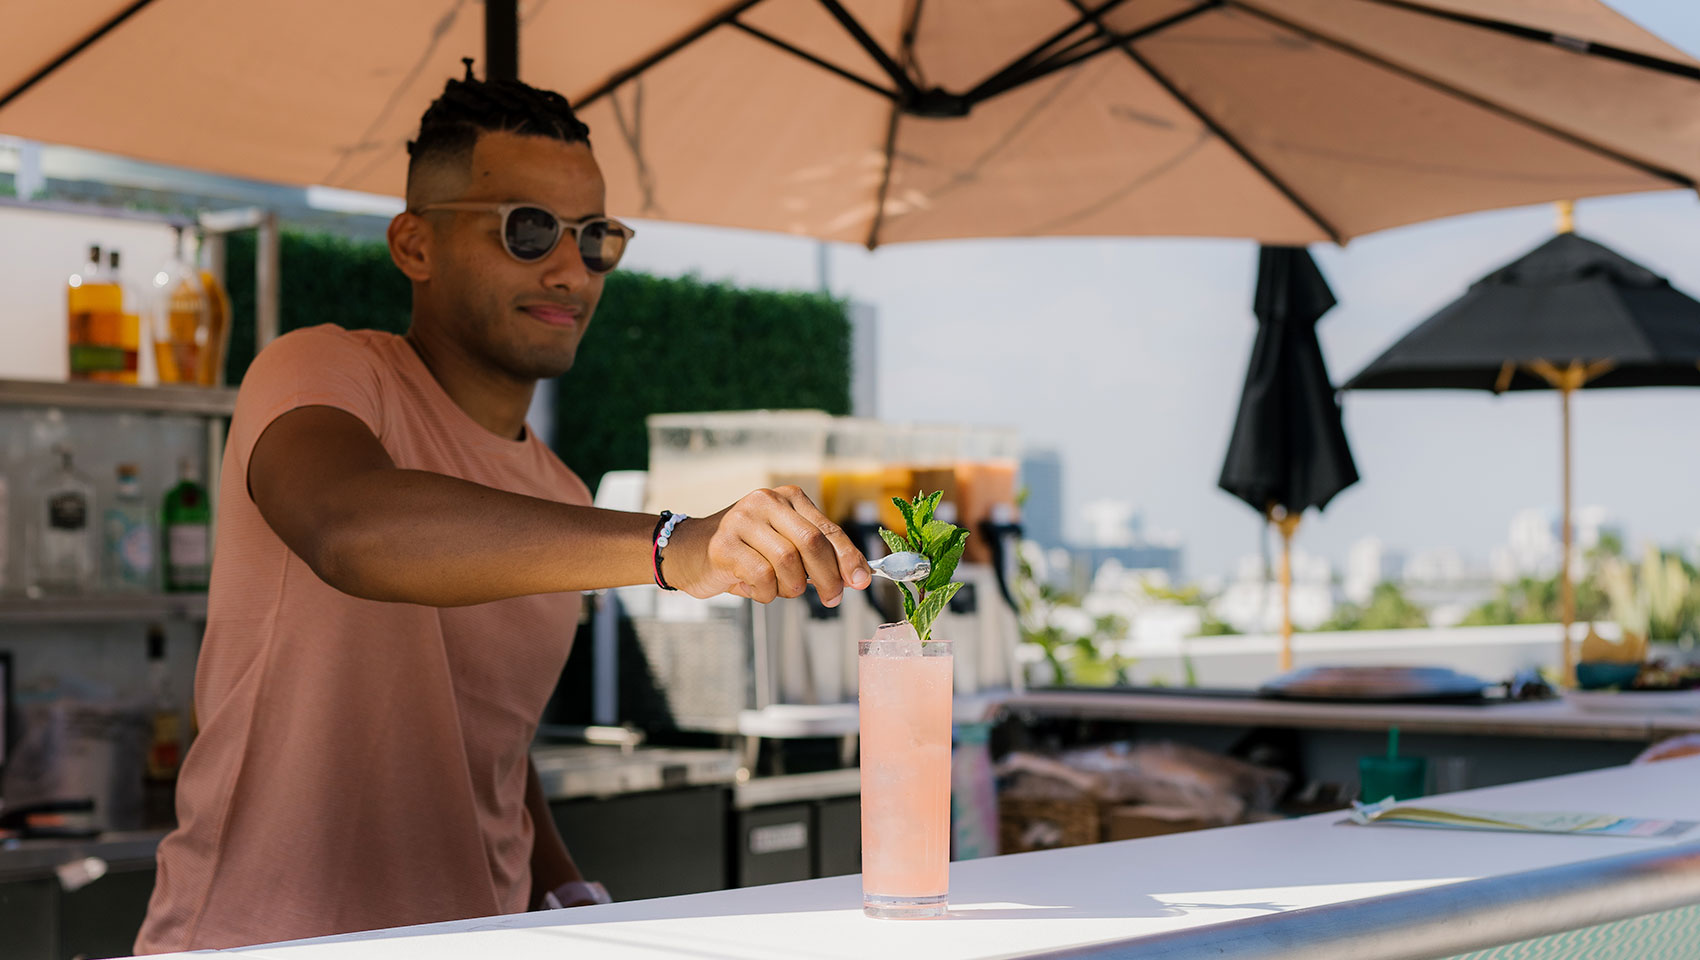 bartender preparing a cocktail